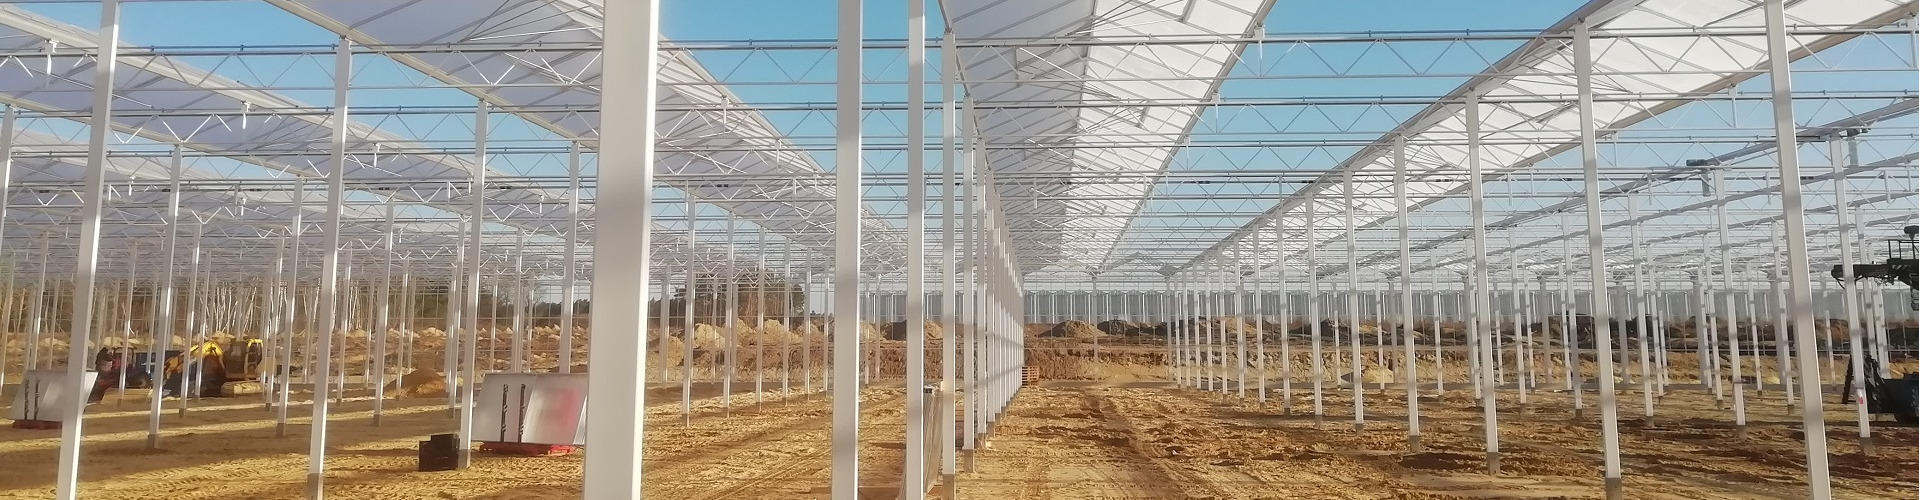 Glass Greenhouse Construction 